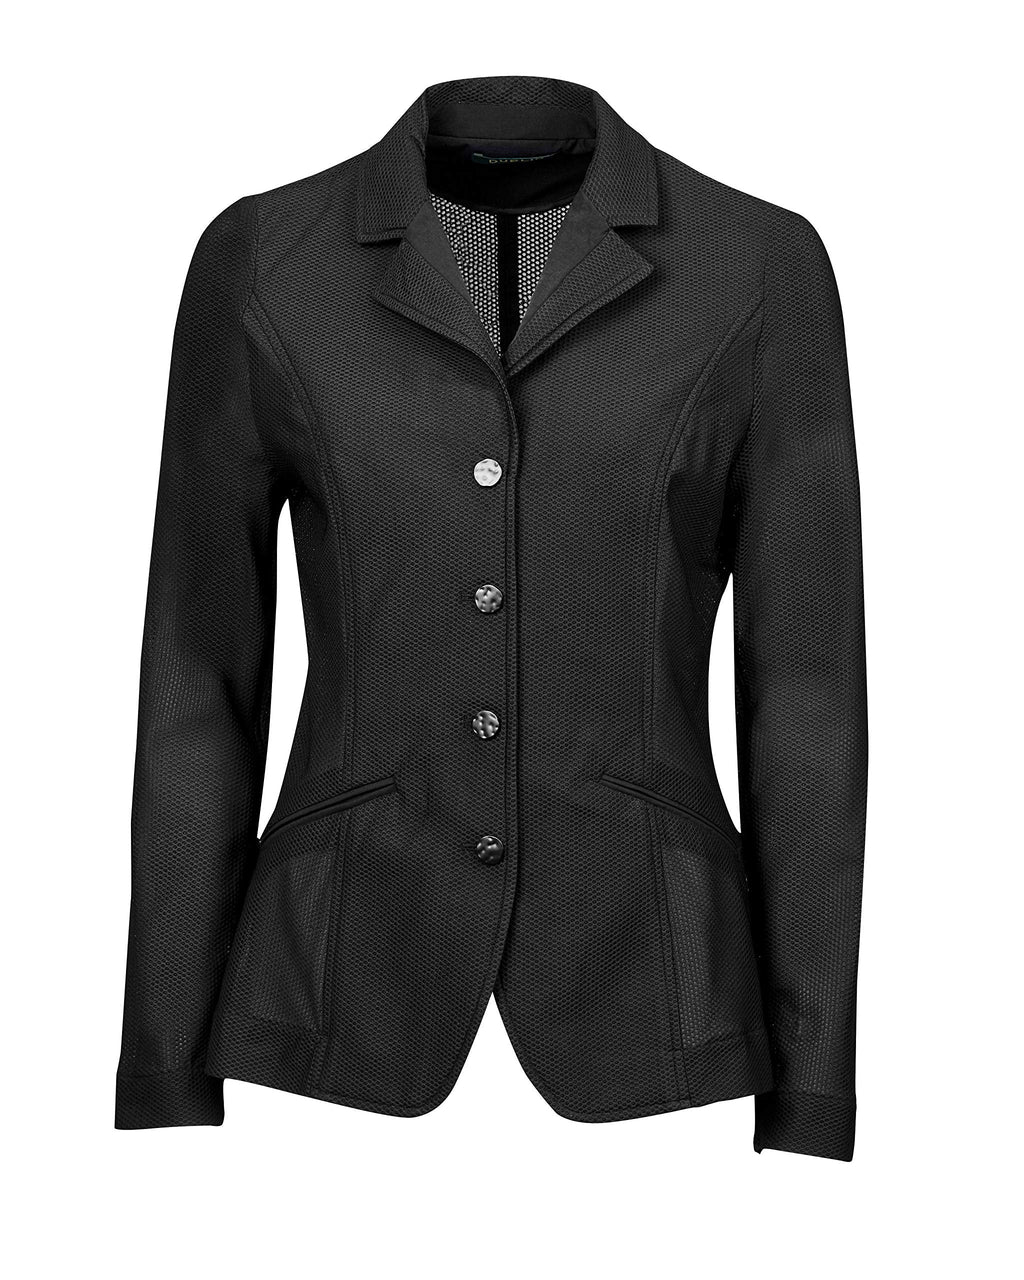 Dublin Hanna Mesh Tailored Women's Show Jacket II Black 6 - PawsPlanet Australia